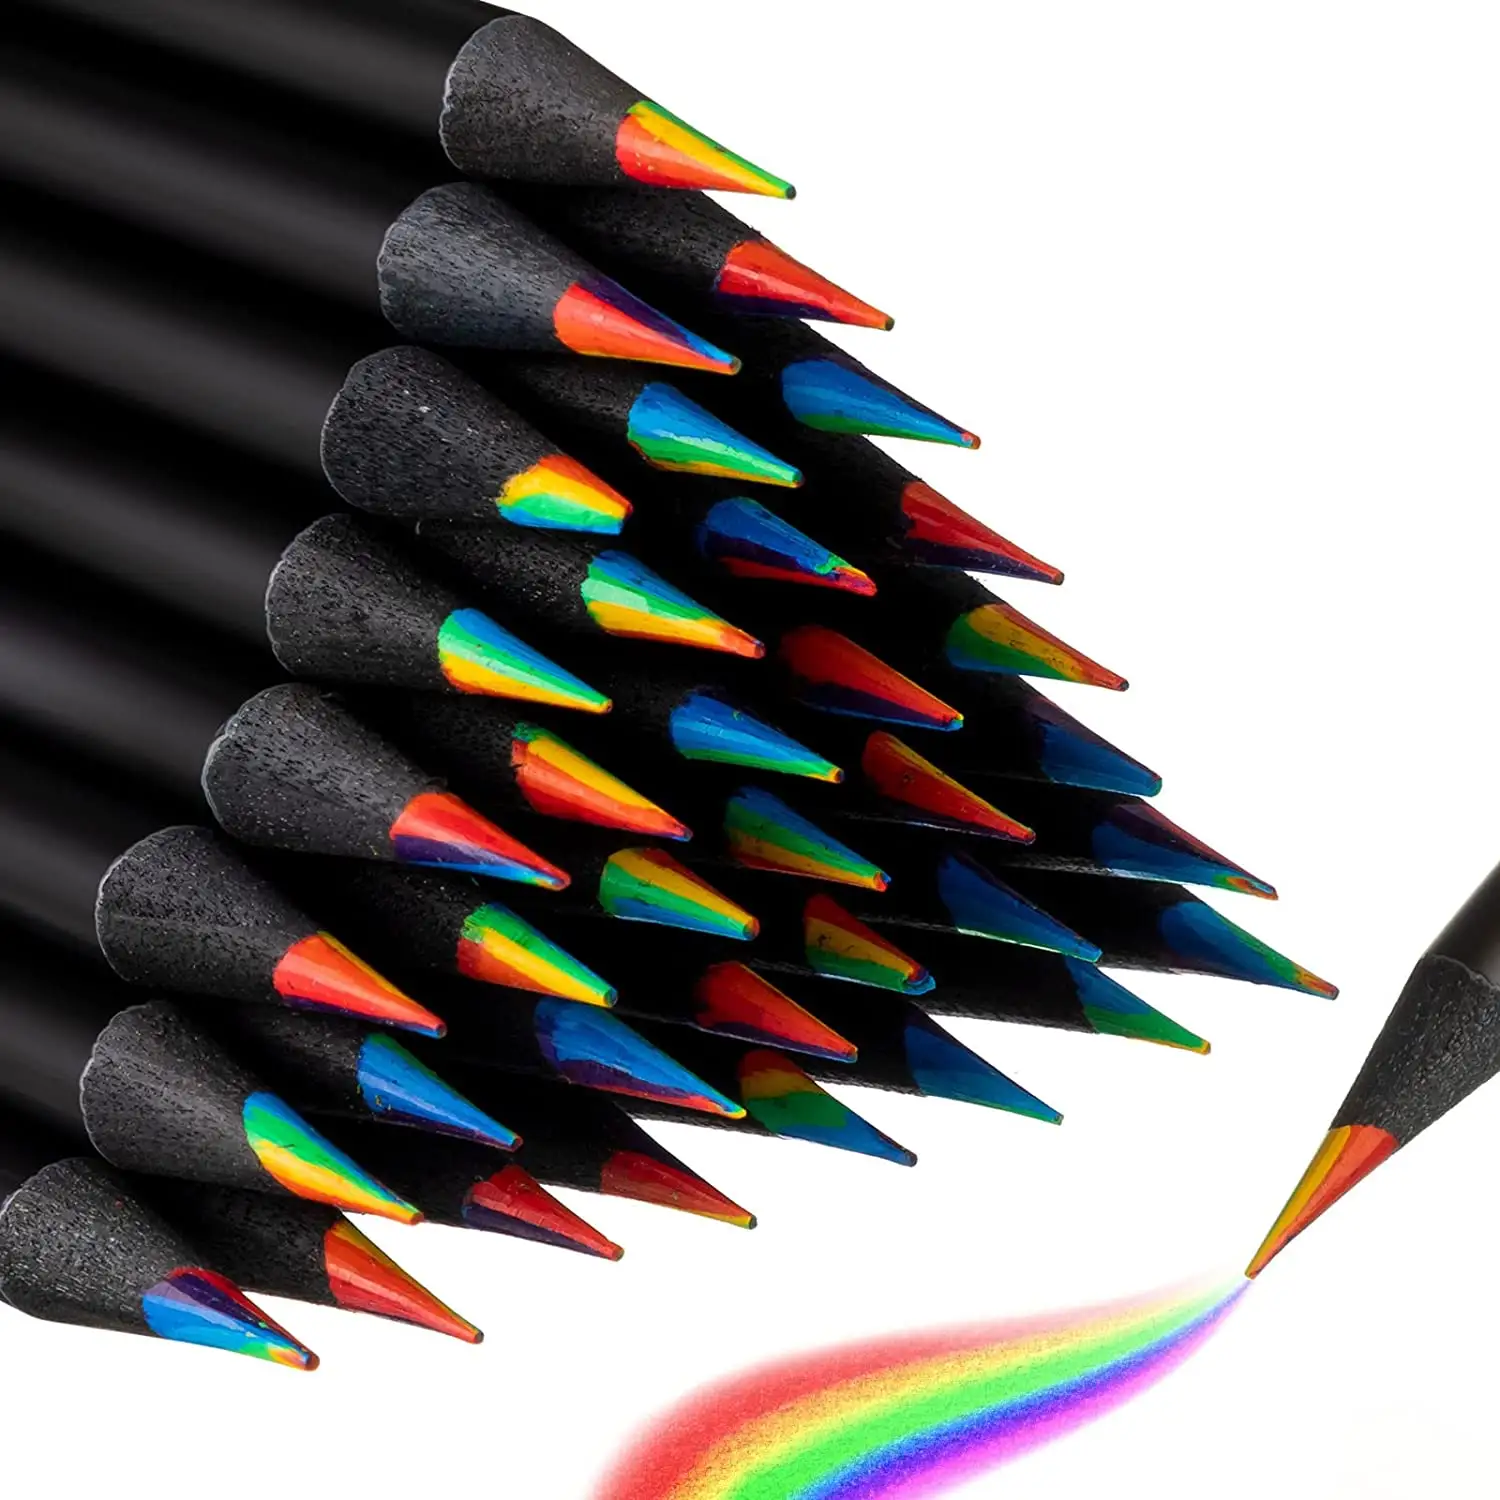 XinyiArt sanat tedarikçisi 3.3mm kalem kurşun ahşap siyah 7 renk 1 gökkuşağı renkli kalemler renkli kalem boyama kitap